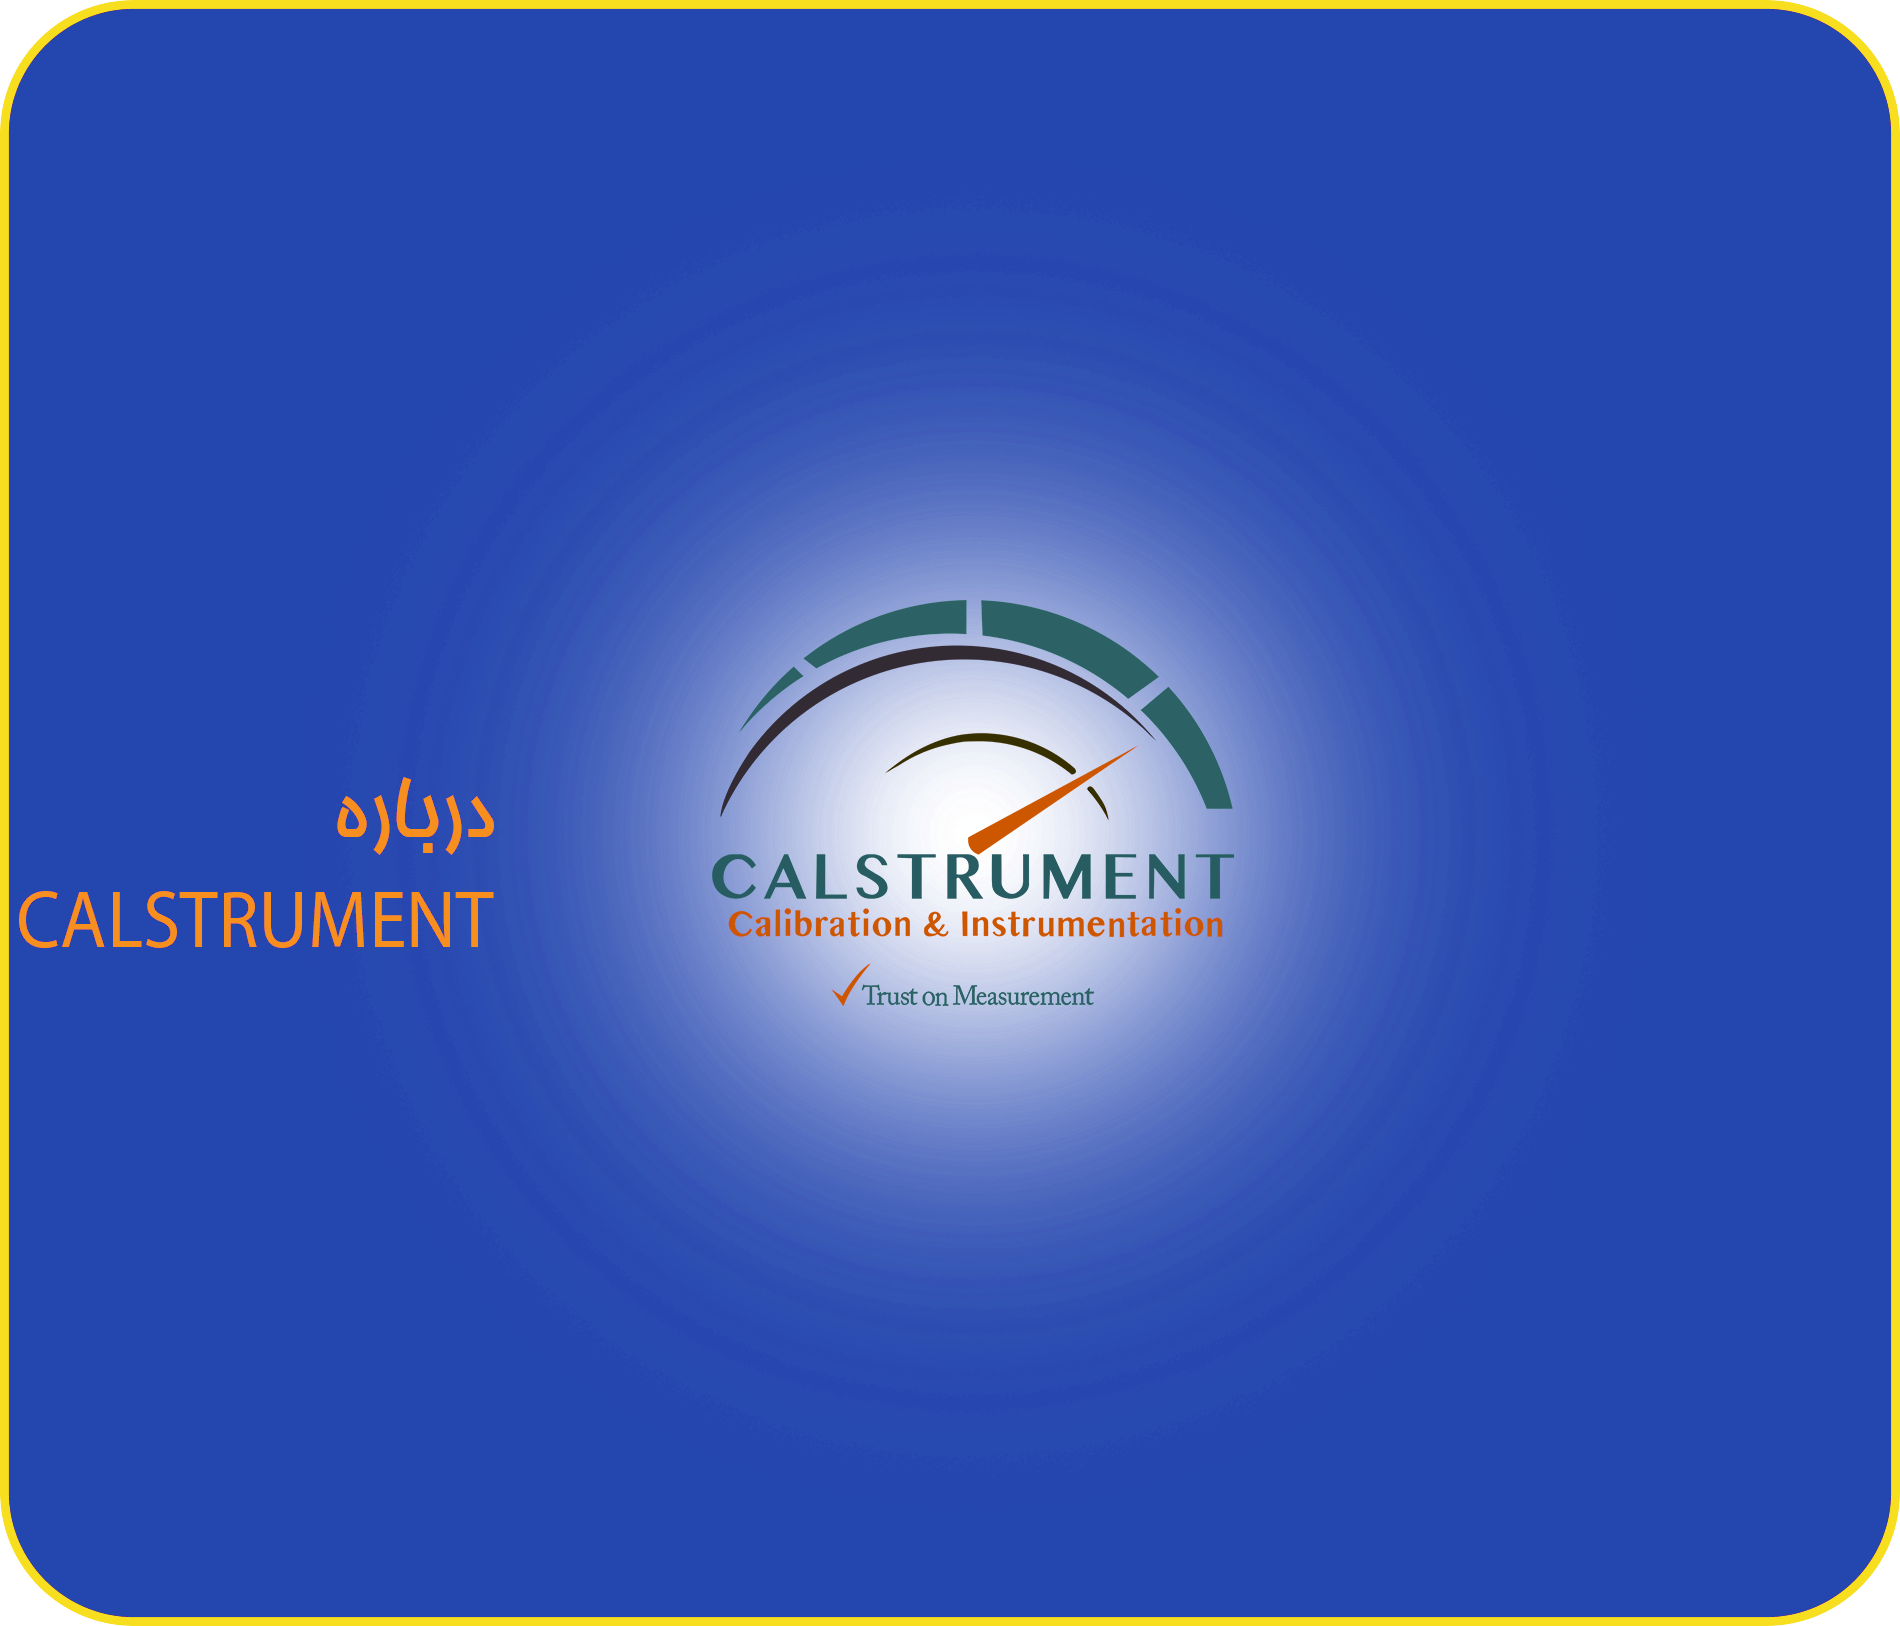 about CALSTRUMENT